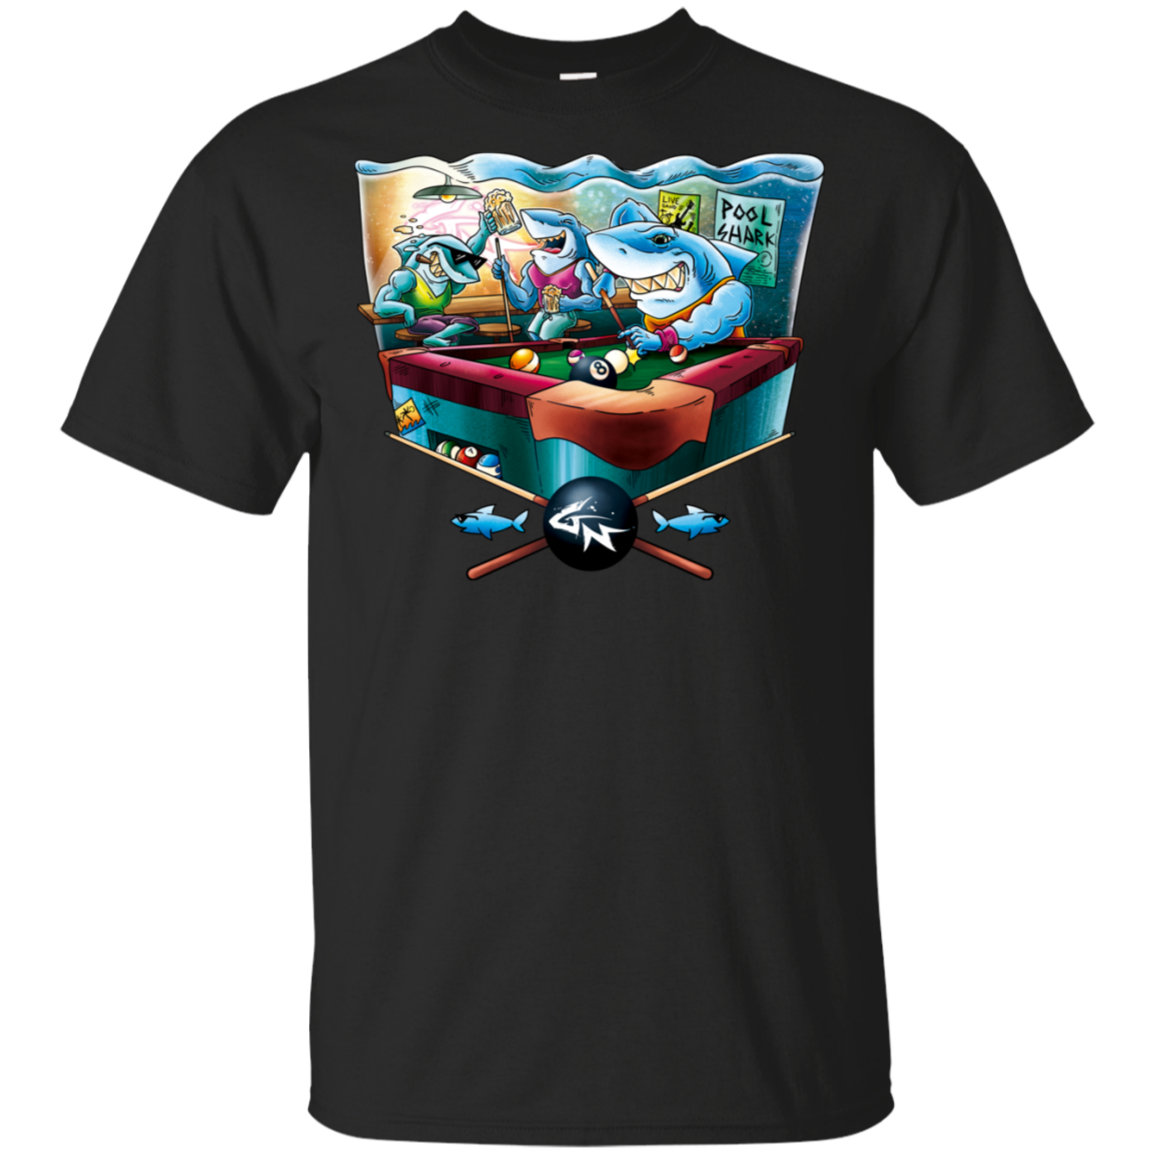 Pool Shark - Cotton T-Shirt